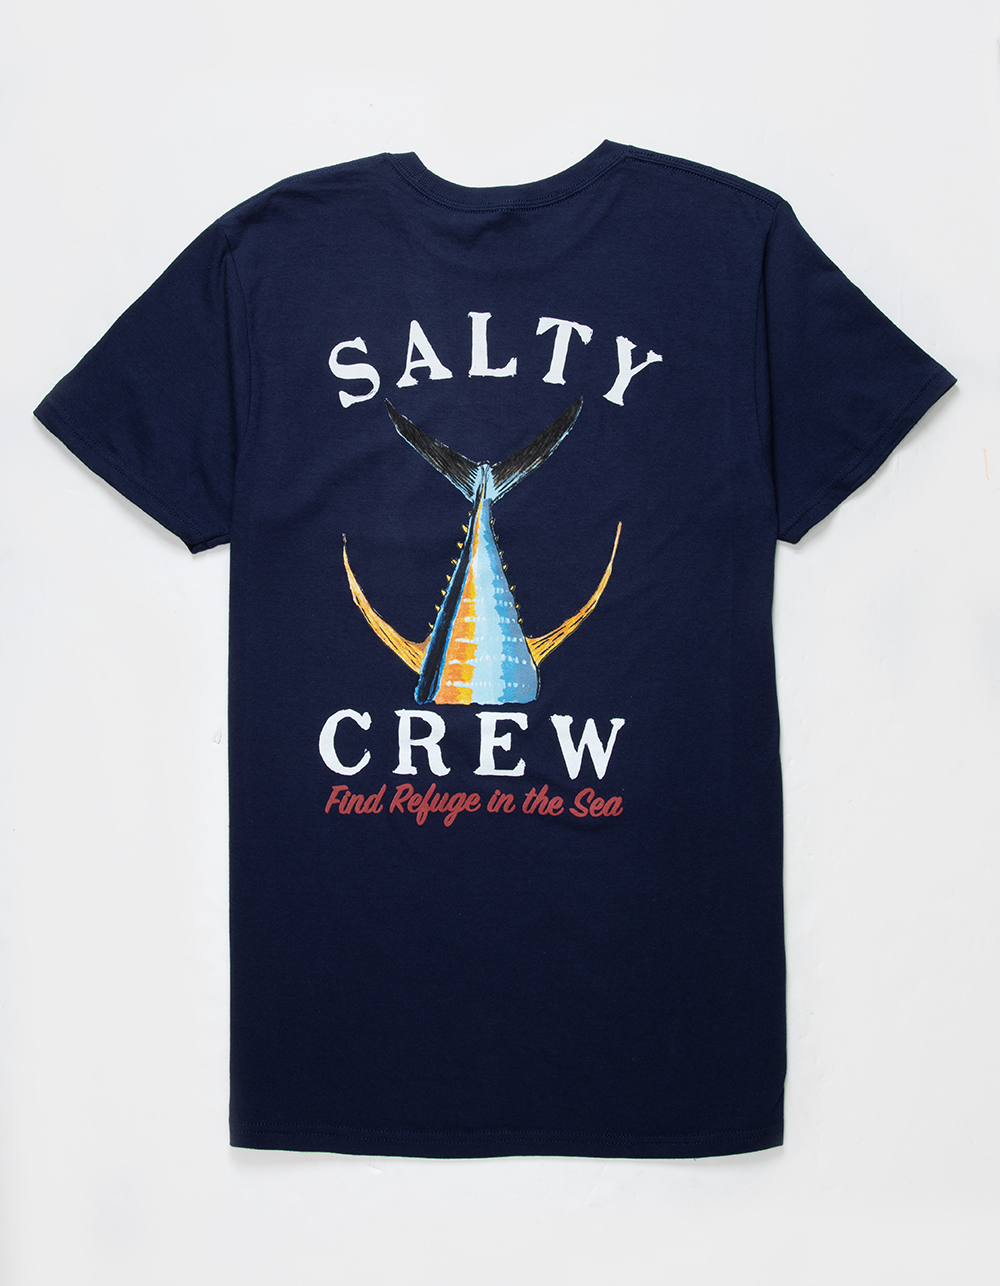 SALTY CREW Tailed Refuge Mens Tee - NAVY | Tillys